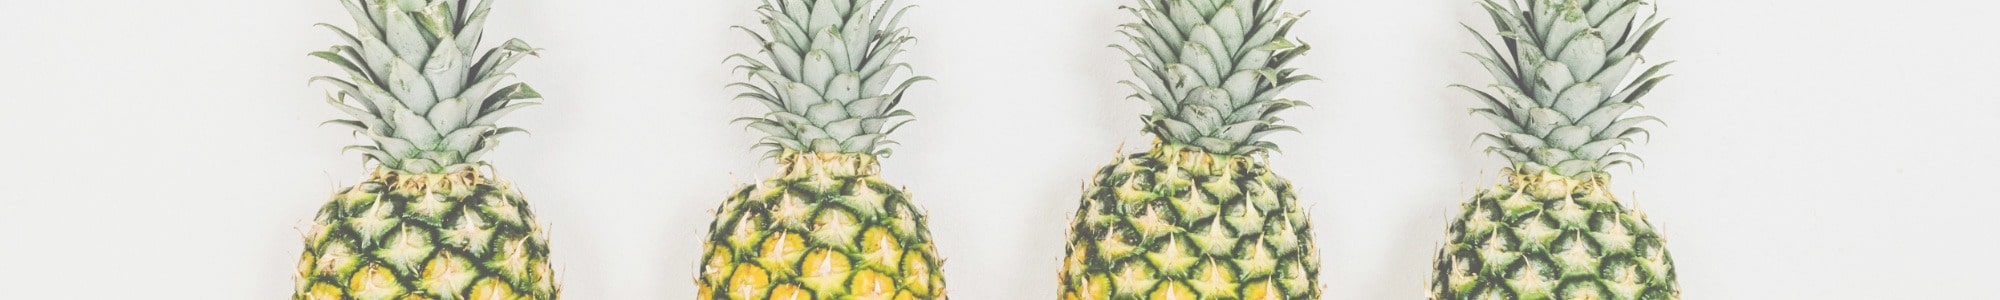 Pineapple banner image